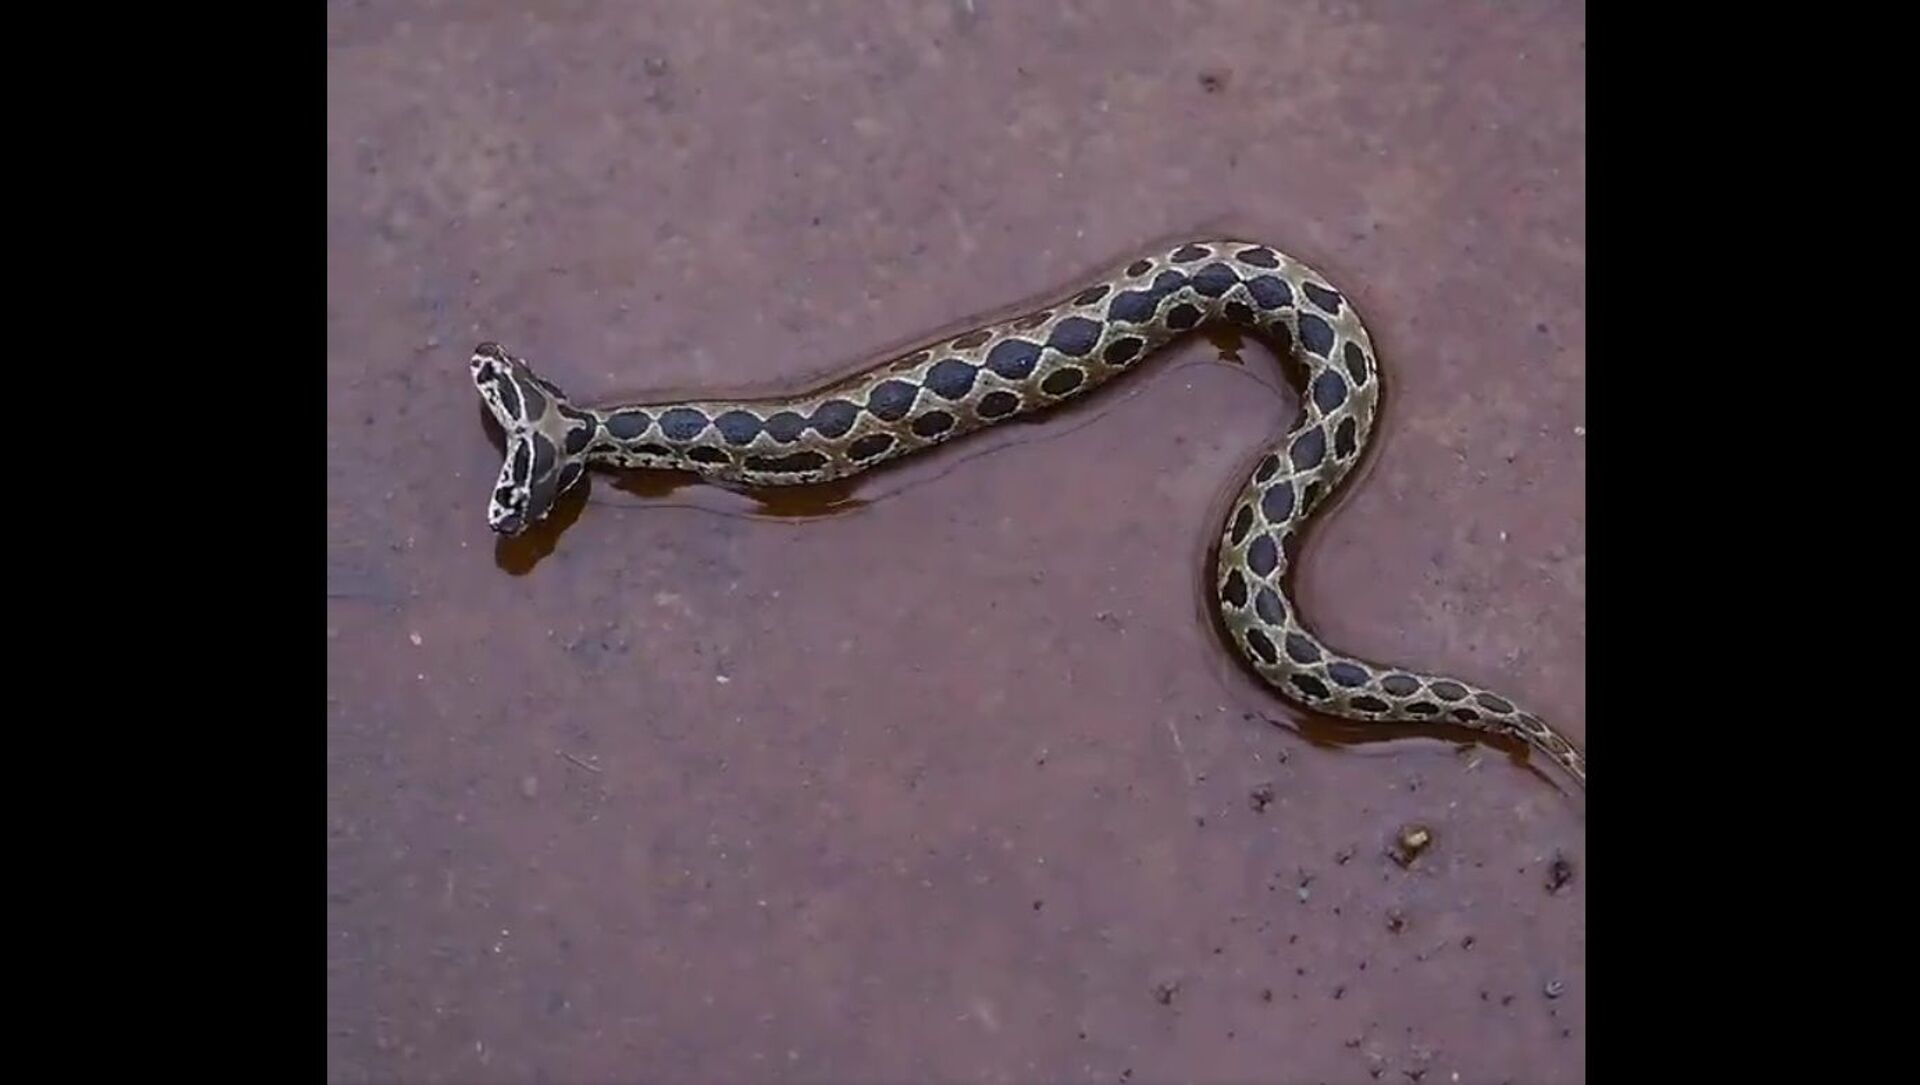 Ultra-rare two-headed viper snake spotted in India - Sputnik International, 1920, 19.08.2021